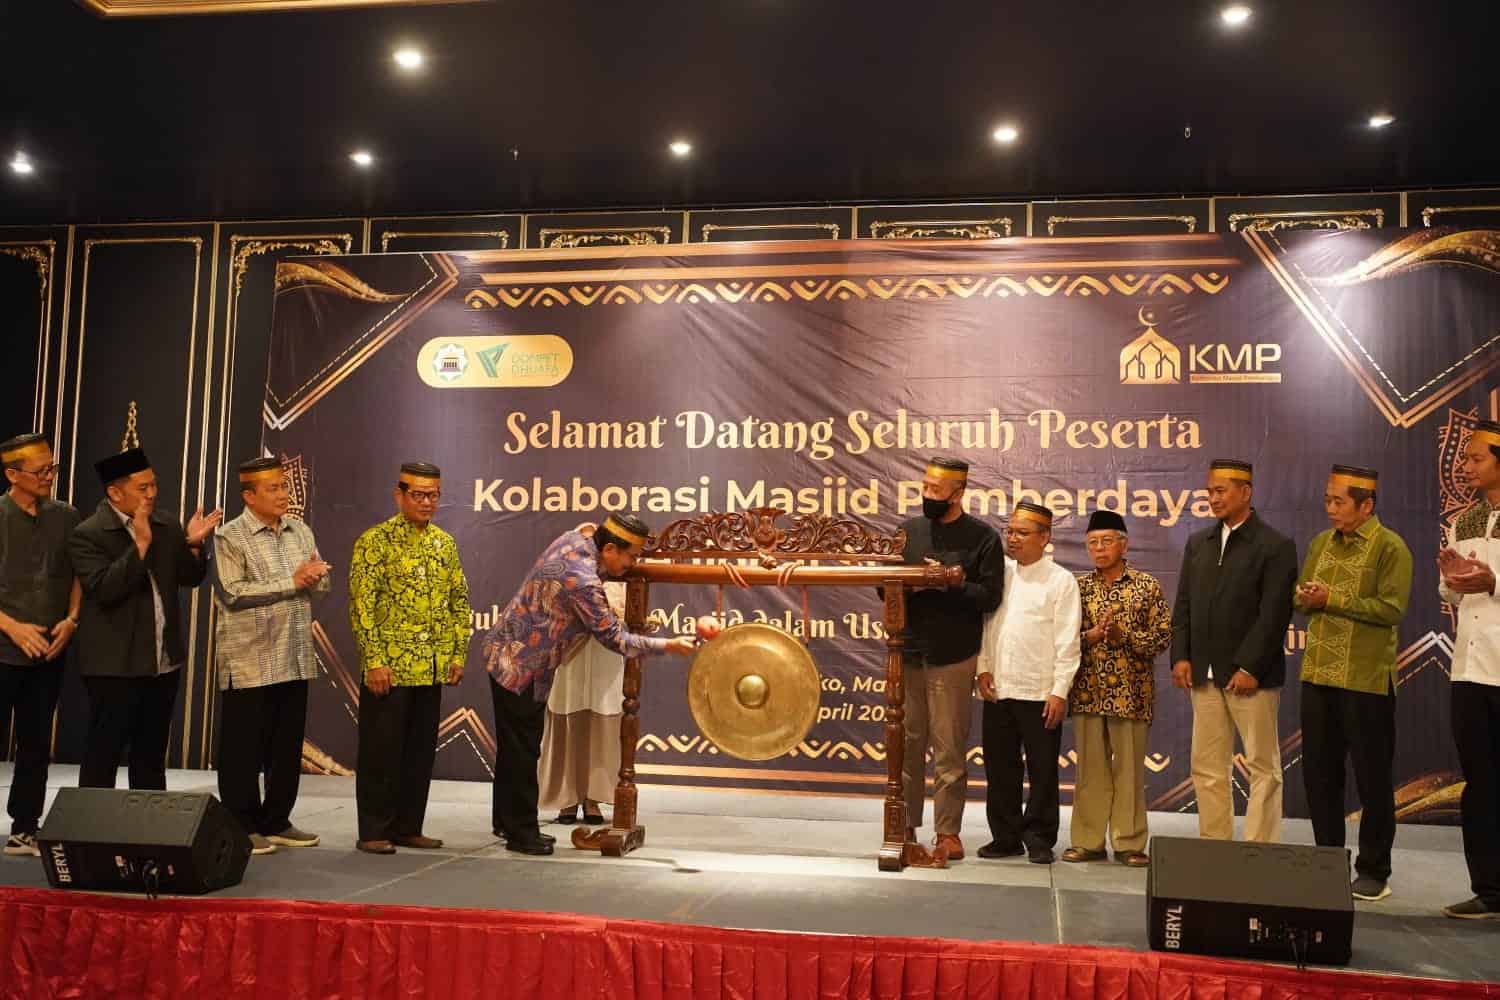 Kolaborasi Masjid Pemberdaya Regional Sulawesi Selatan-Dompet Dhuafa.